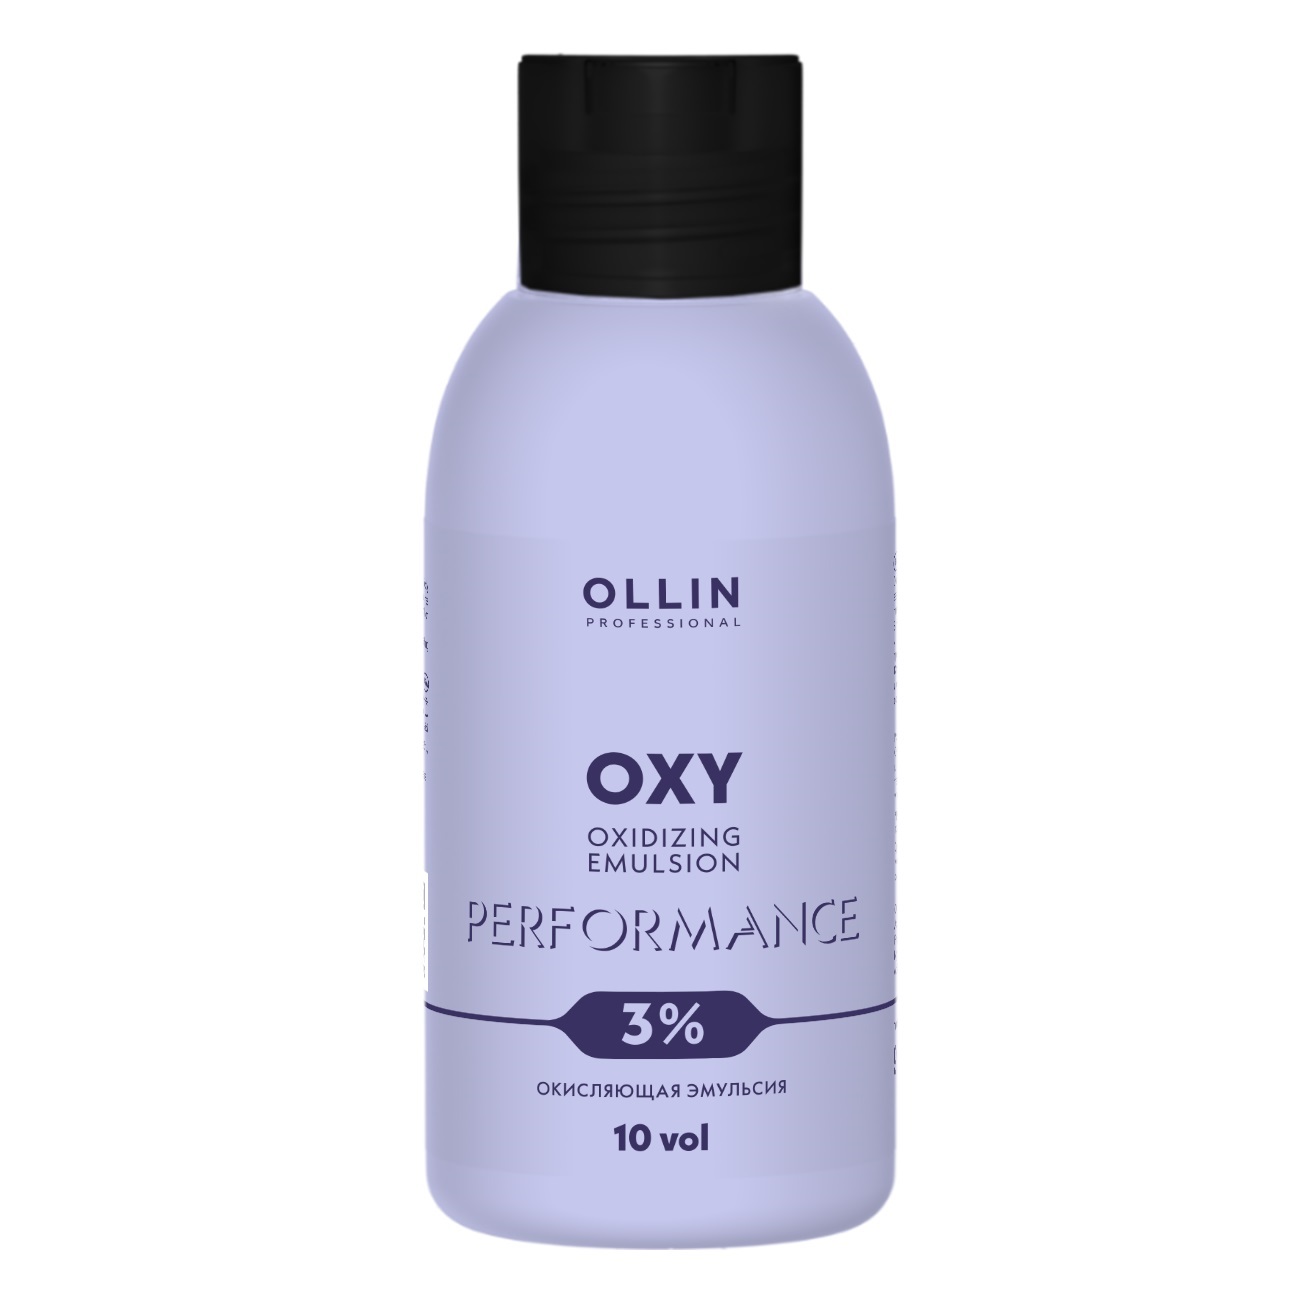 Ollin Professional Окисляющая эмульсия 3% 10 vol, 90 мл (Ollin Professional, Performance)